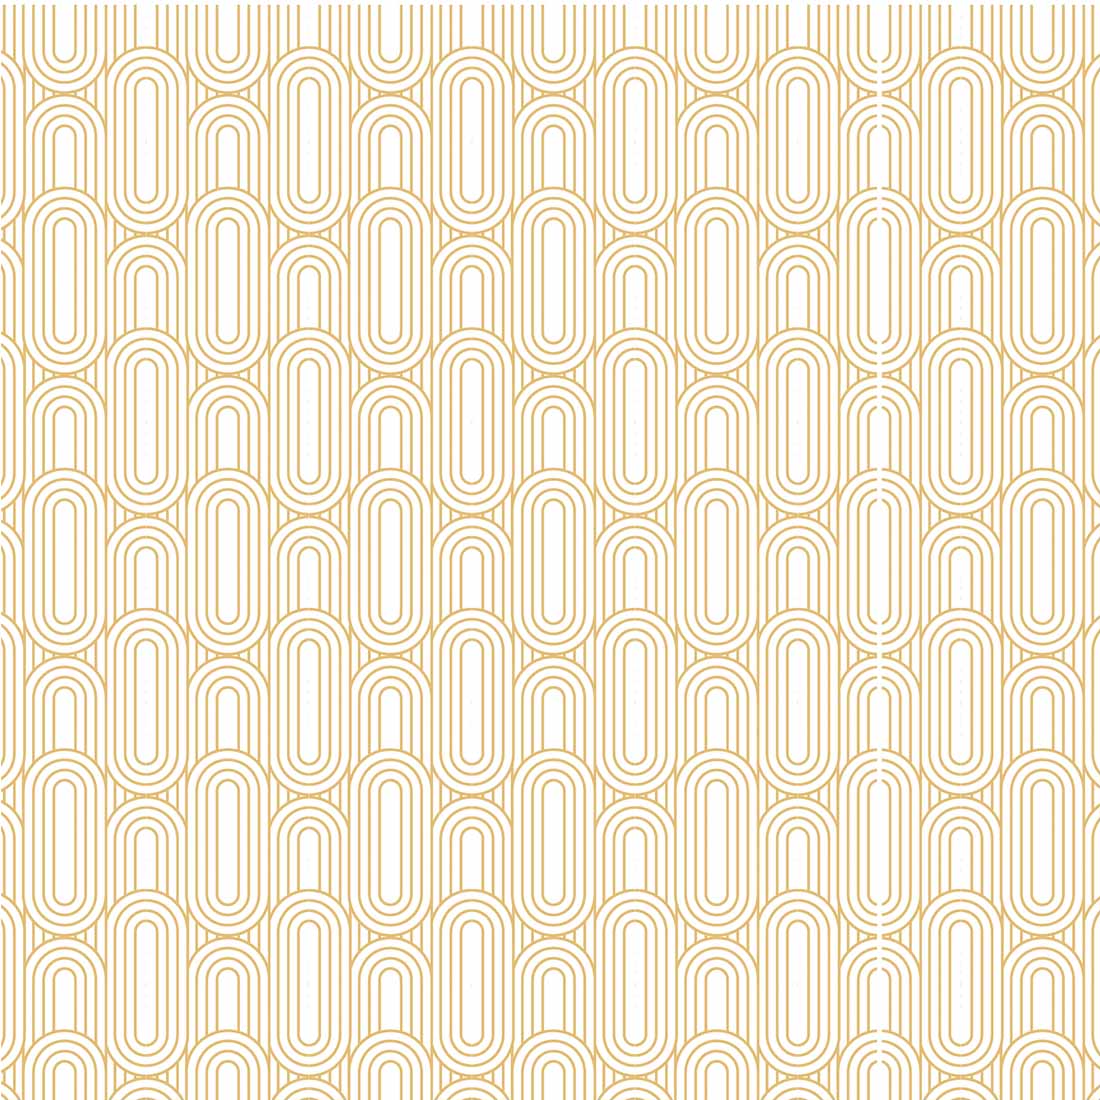 Beige and white geometric pattern.